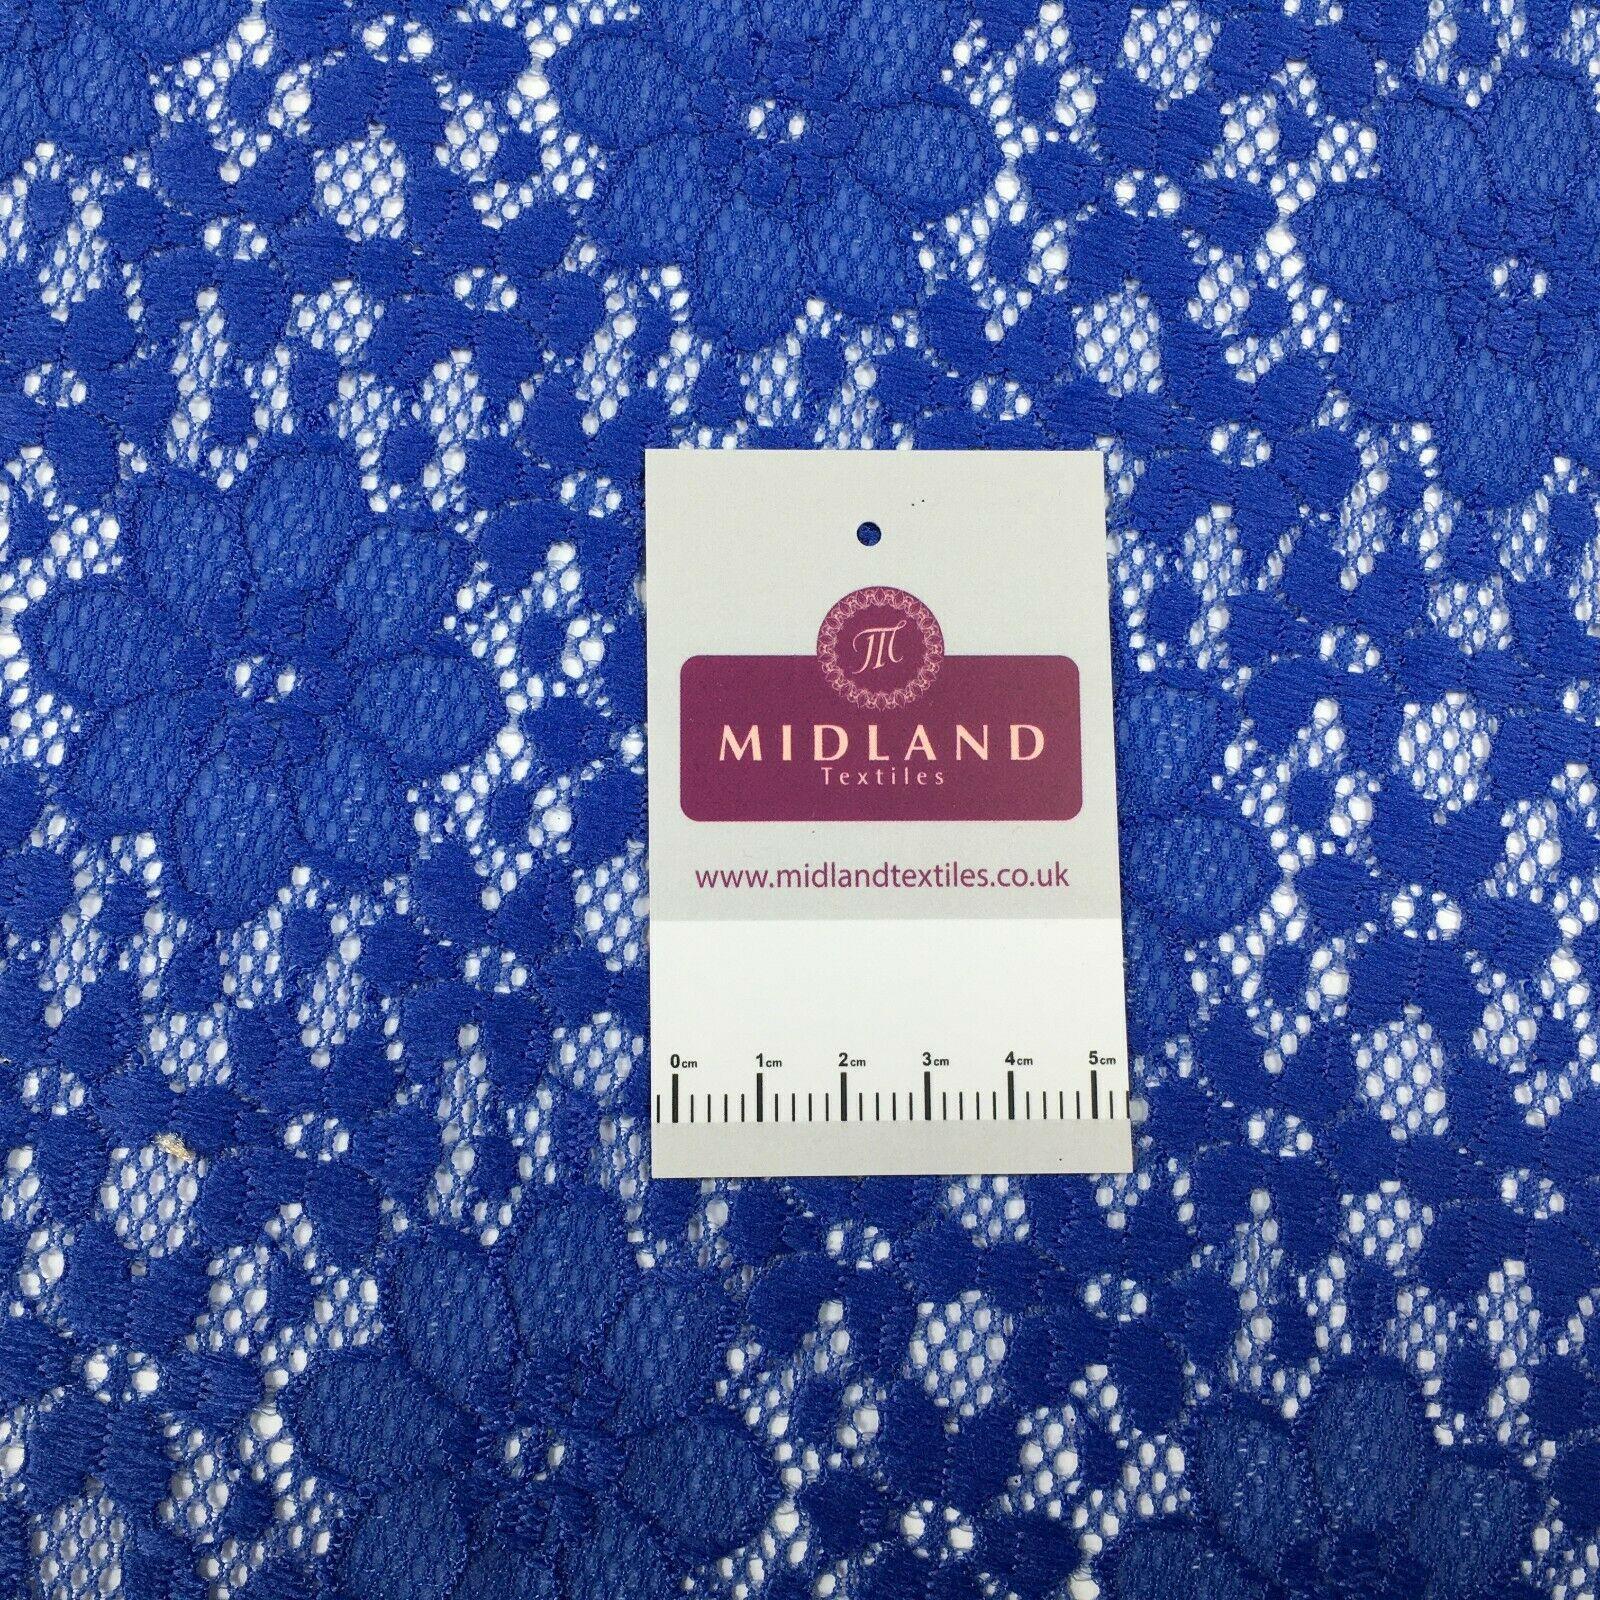 Blue Soft floral Net dress Scalloped edge Fabric 140 cm M186-58 Mtex